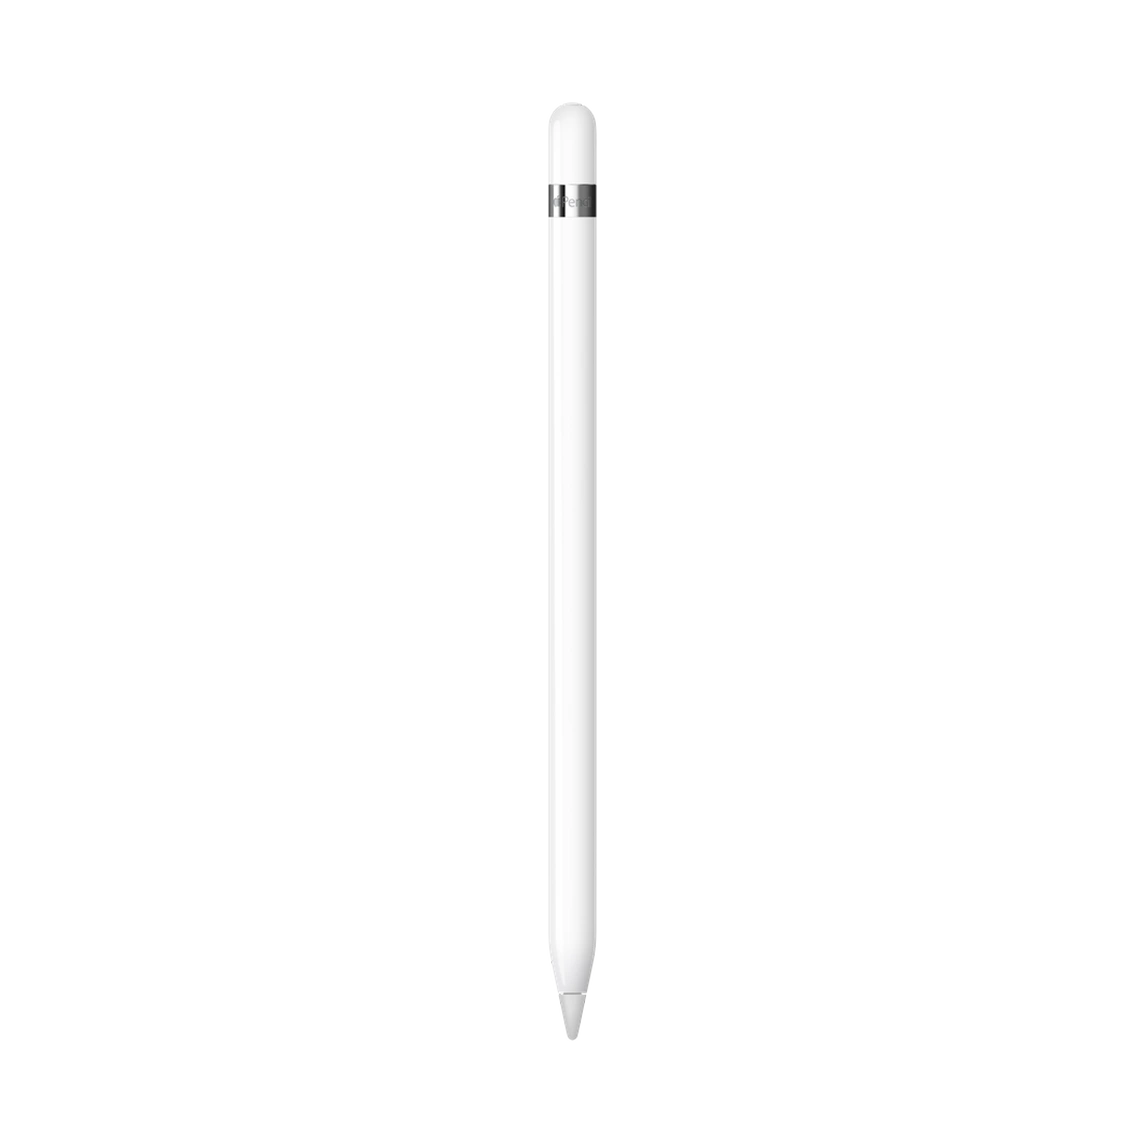 Apple Pencil 1st generation